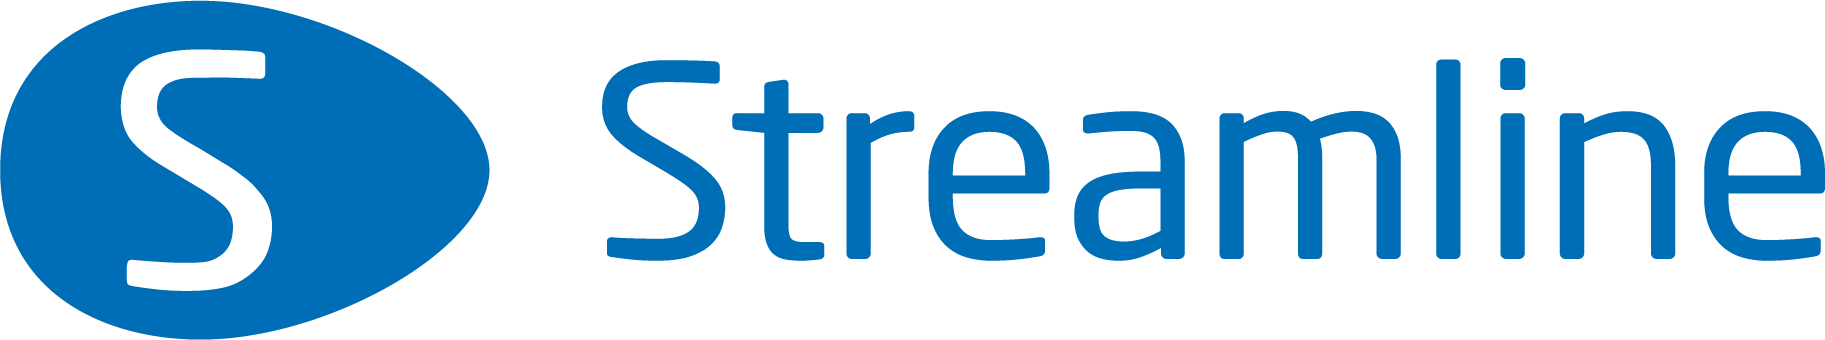 Streamline logo blue